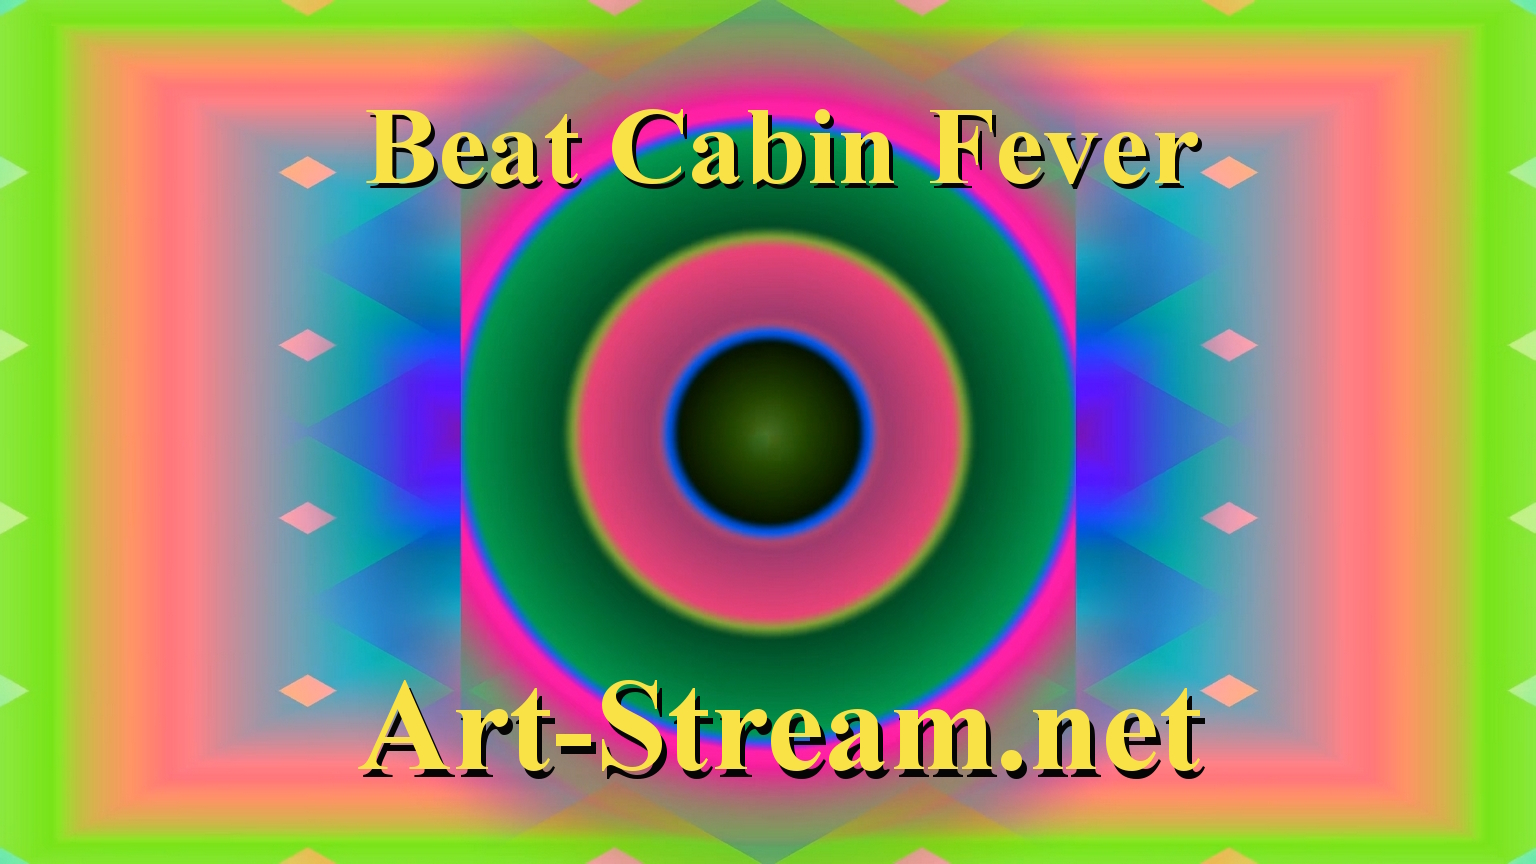 Art-Stream.net